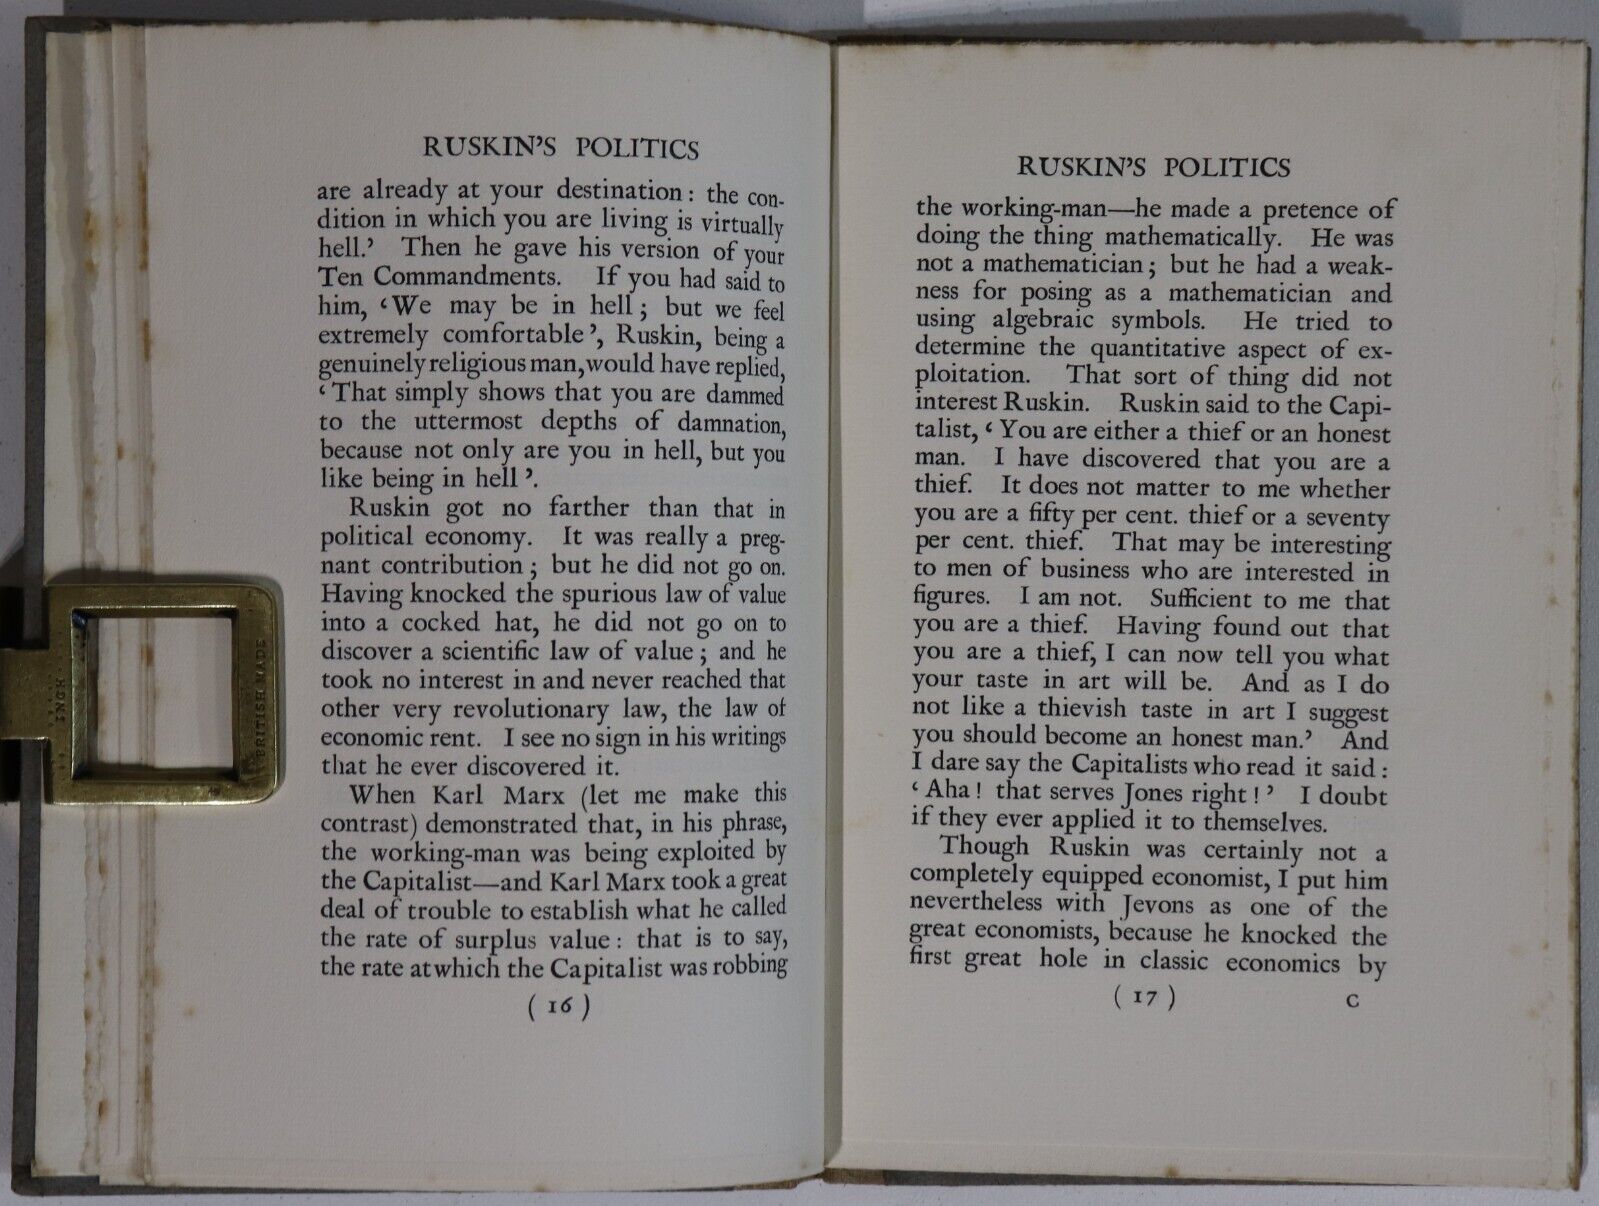 Ruskin's Politics by Bernard Shaw - 1921 - 1st Edition Politics Book